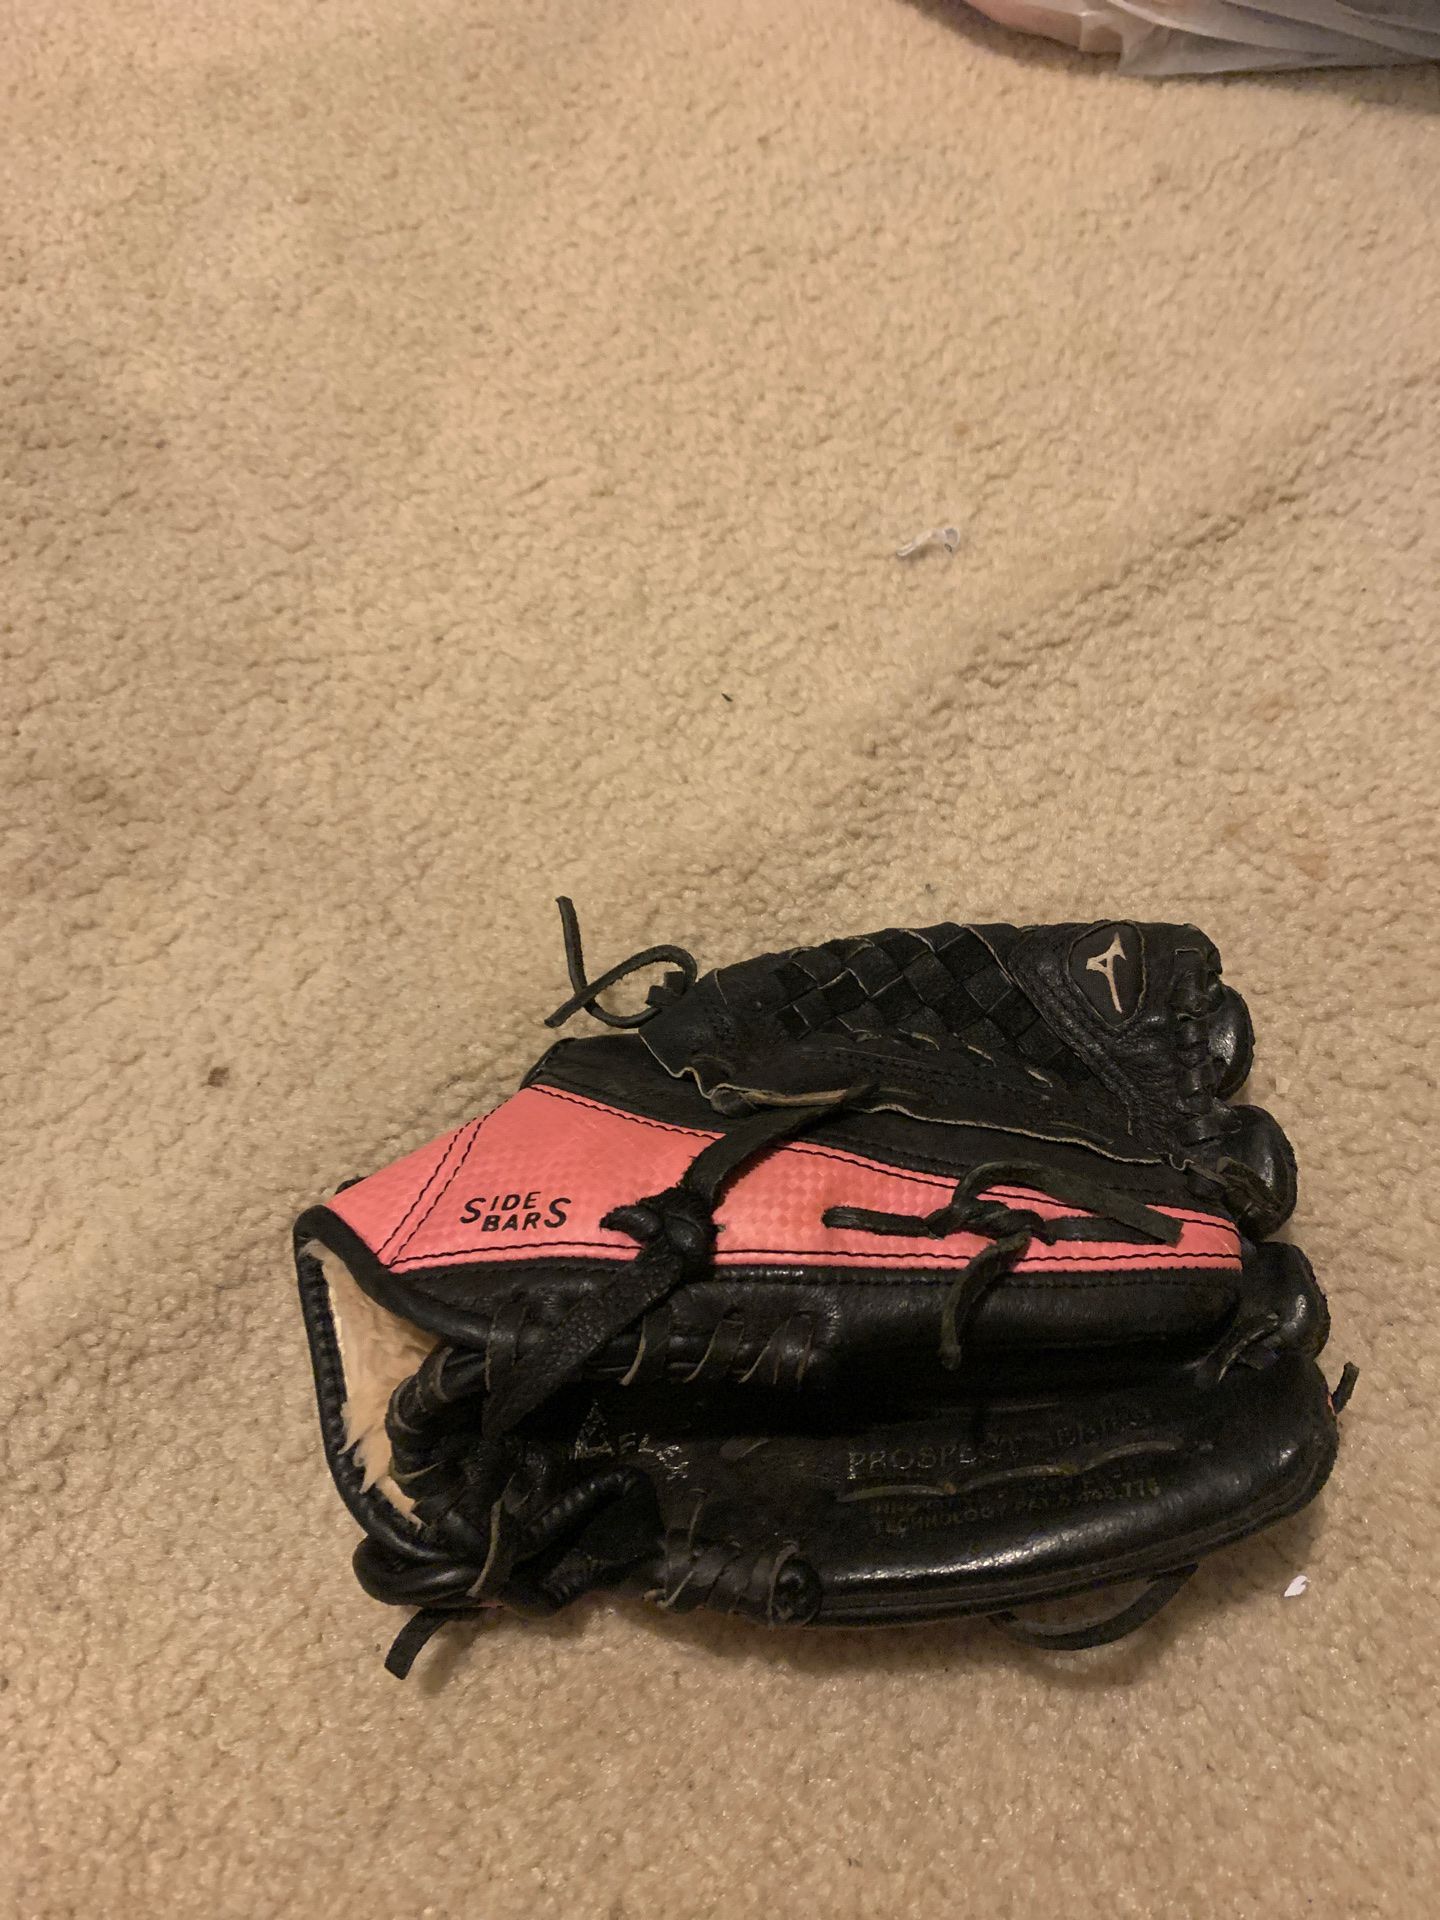 Mizuno 10” inches softball glove $5.00